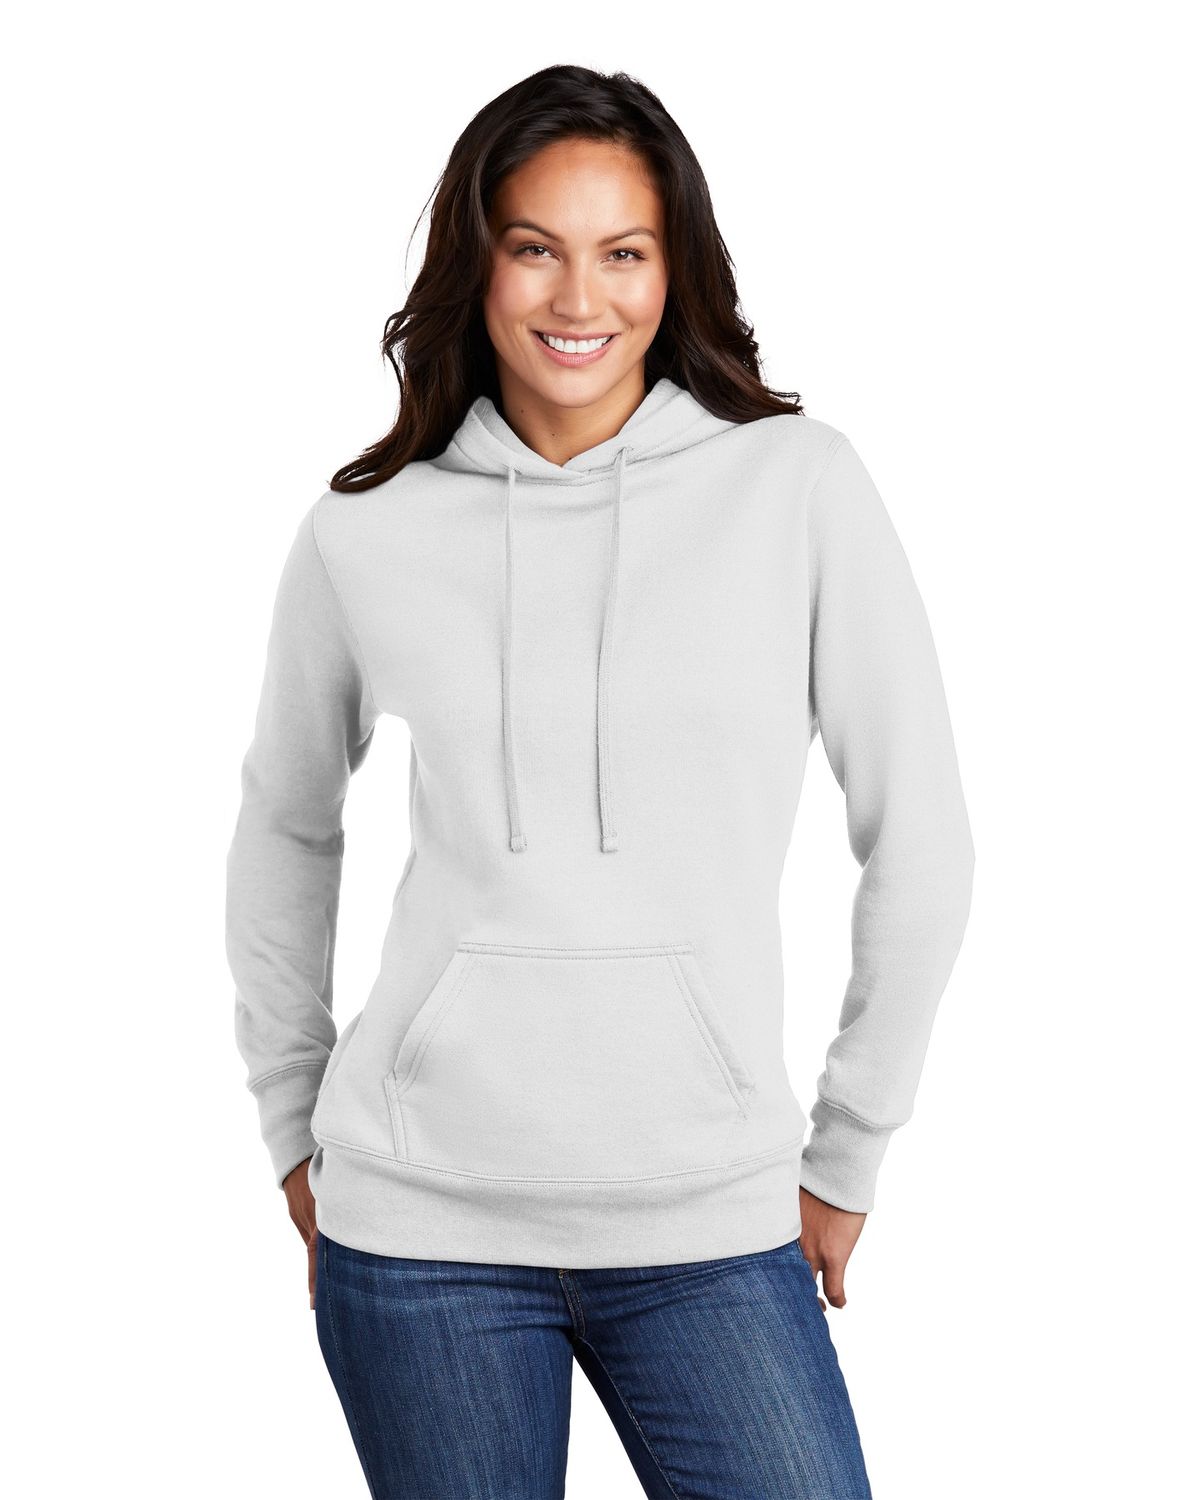 'Port & Company LPC78H mpany  Ladies Core Fleece Pullover Hooded Sweatshirt'